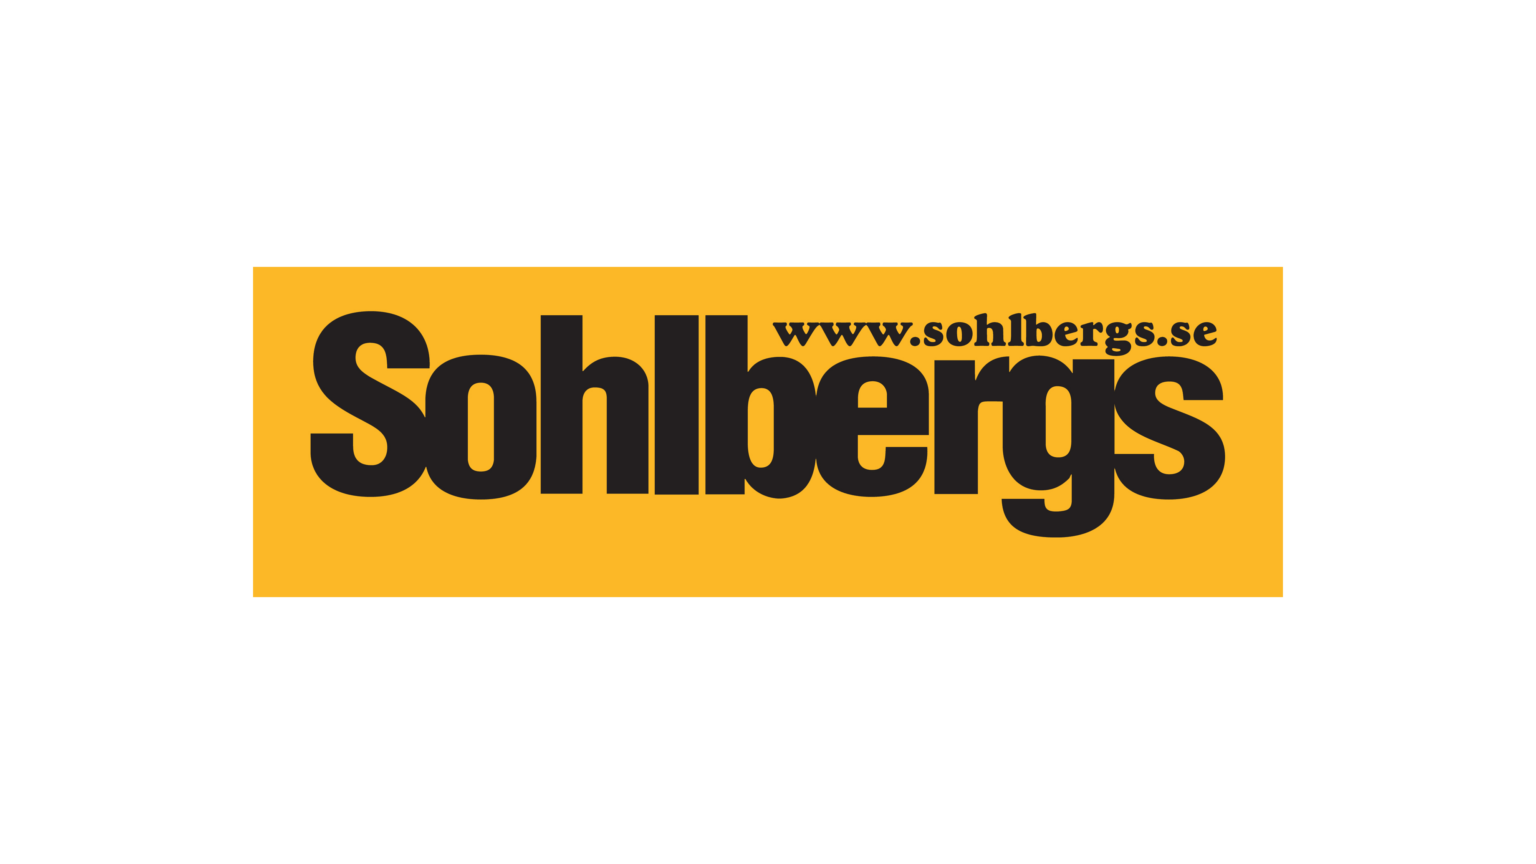 Sohlbergs